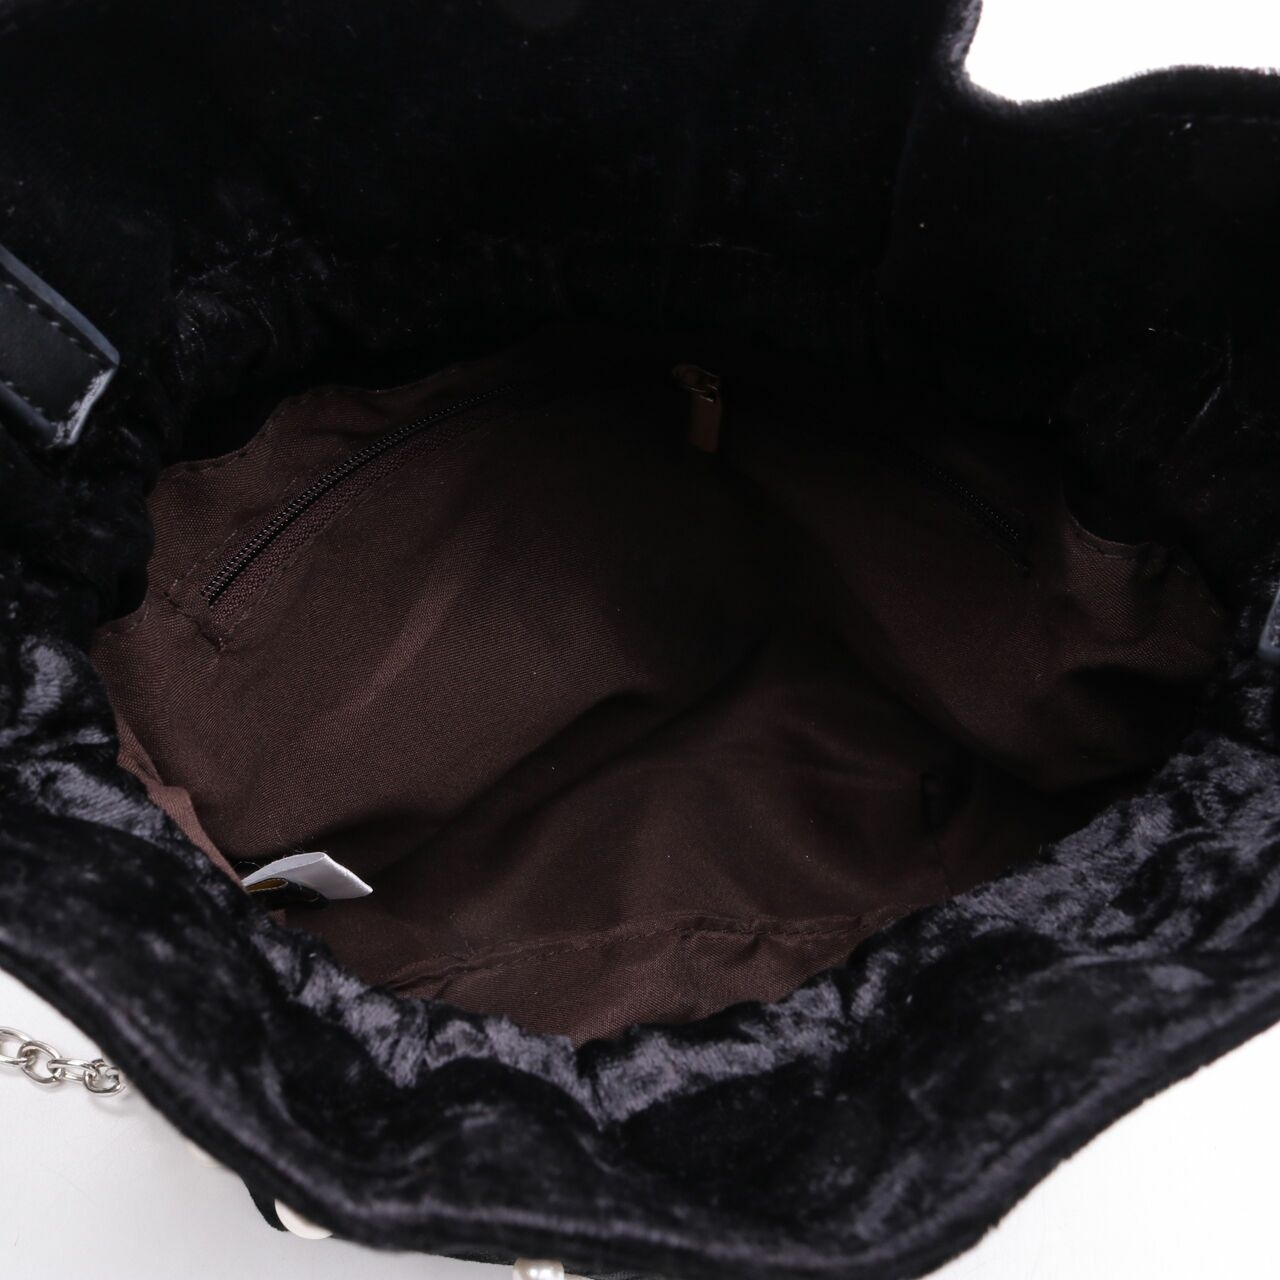 Zalia Bucket Velvet Pearl Black Satchel Bag